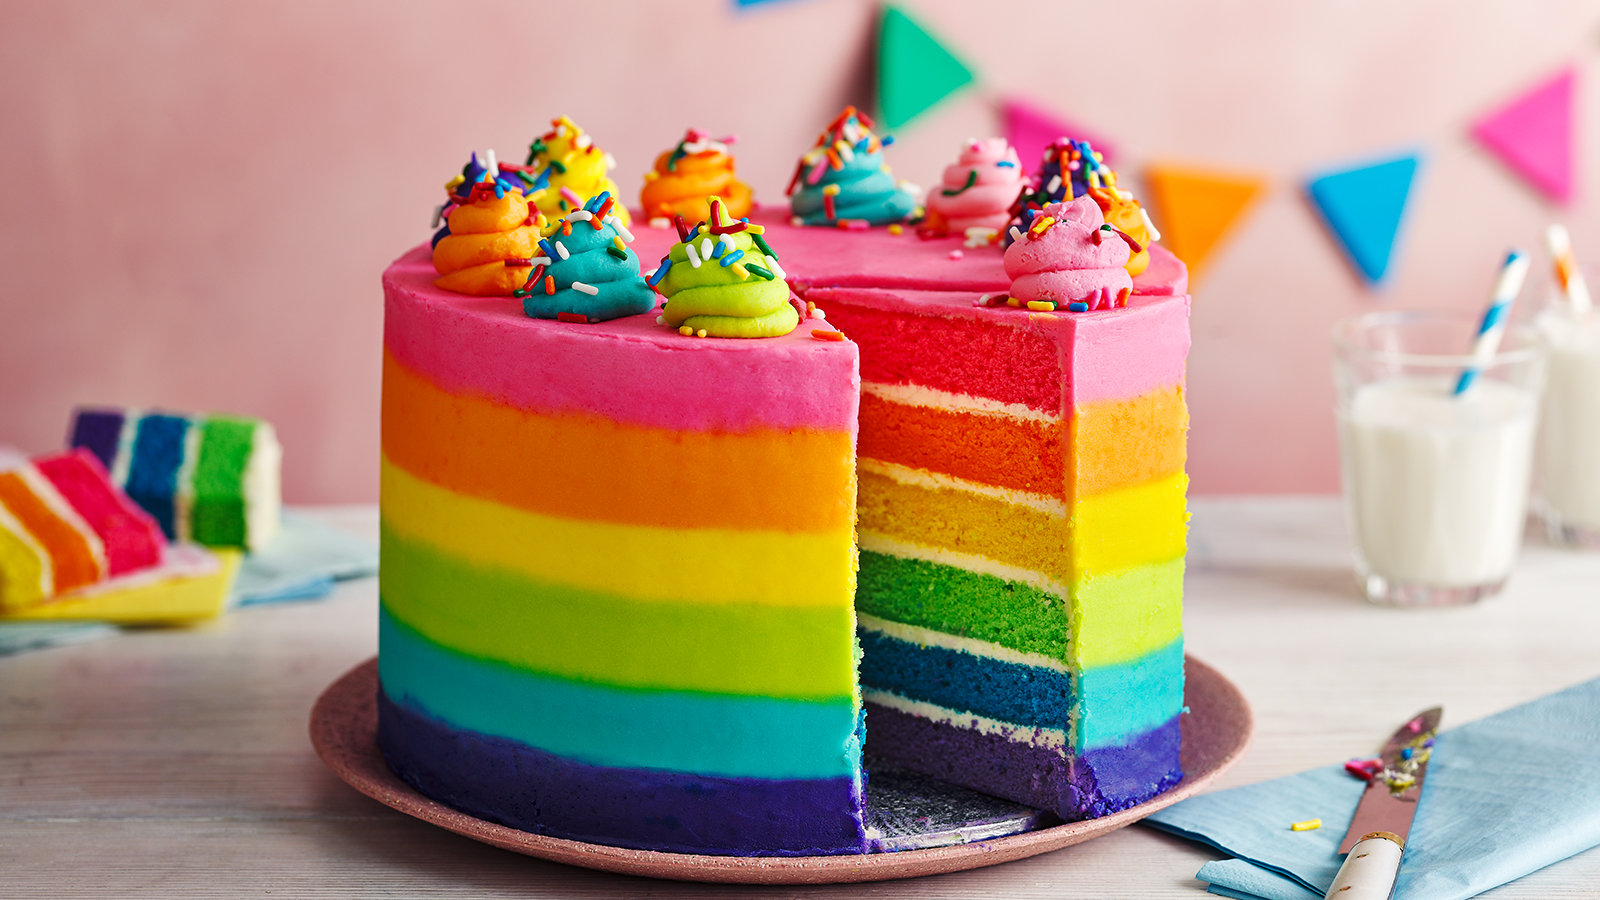 Pastel Rainbow Cake Recipe - Easter Cake Ideas - Rhubarb Crumble Cake,  Streusel Cake - coucoucake